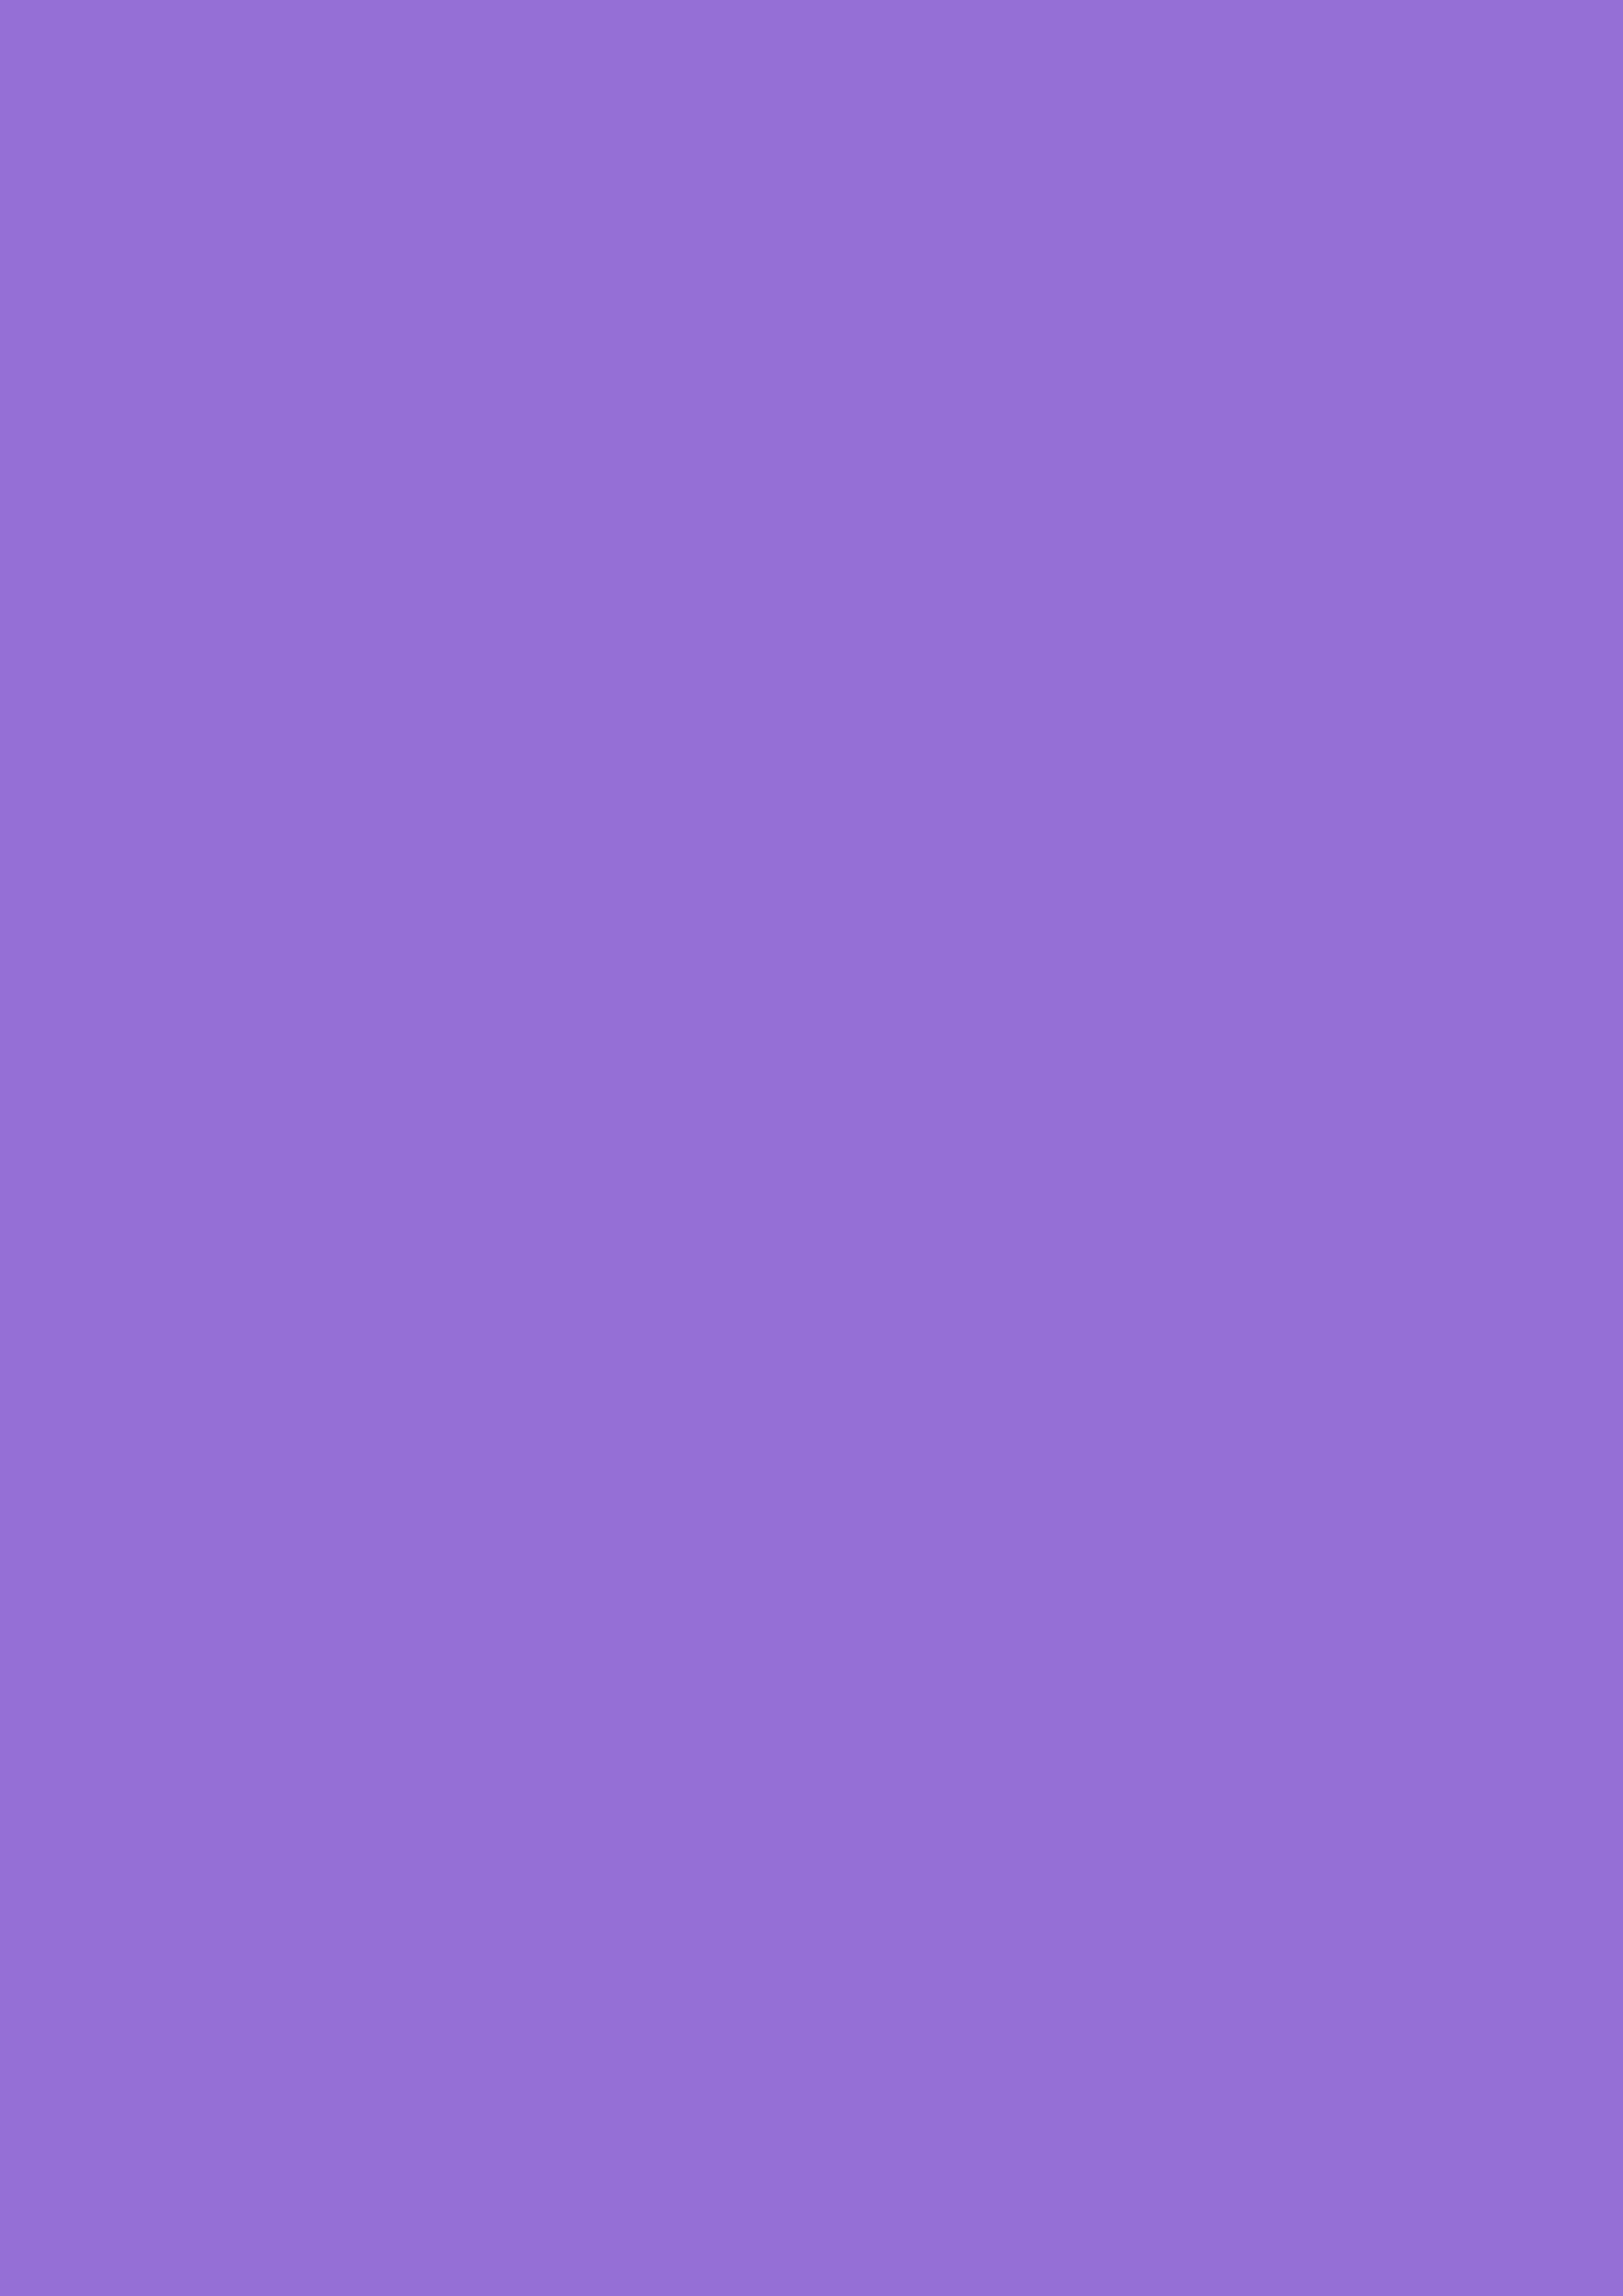 2480x3508 Dark Pastel Purple Solid Color Background